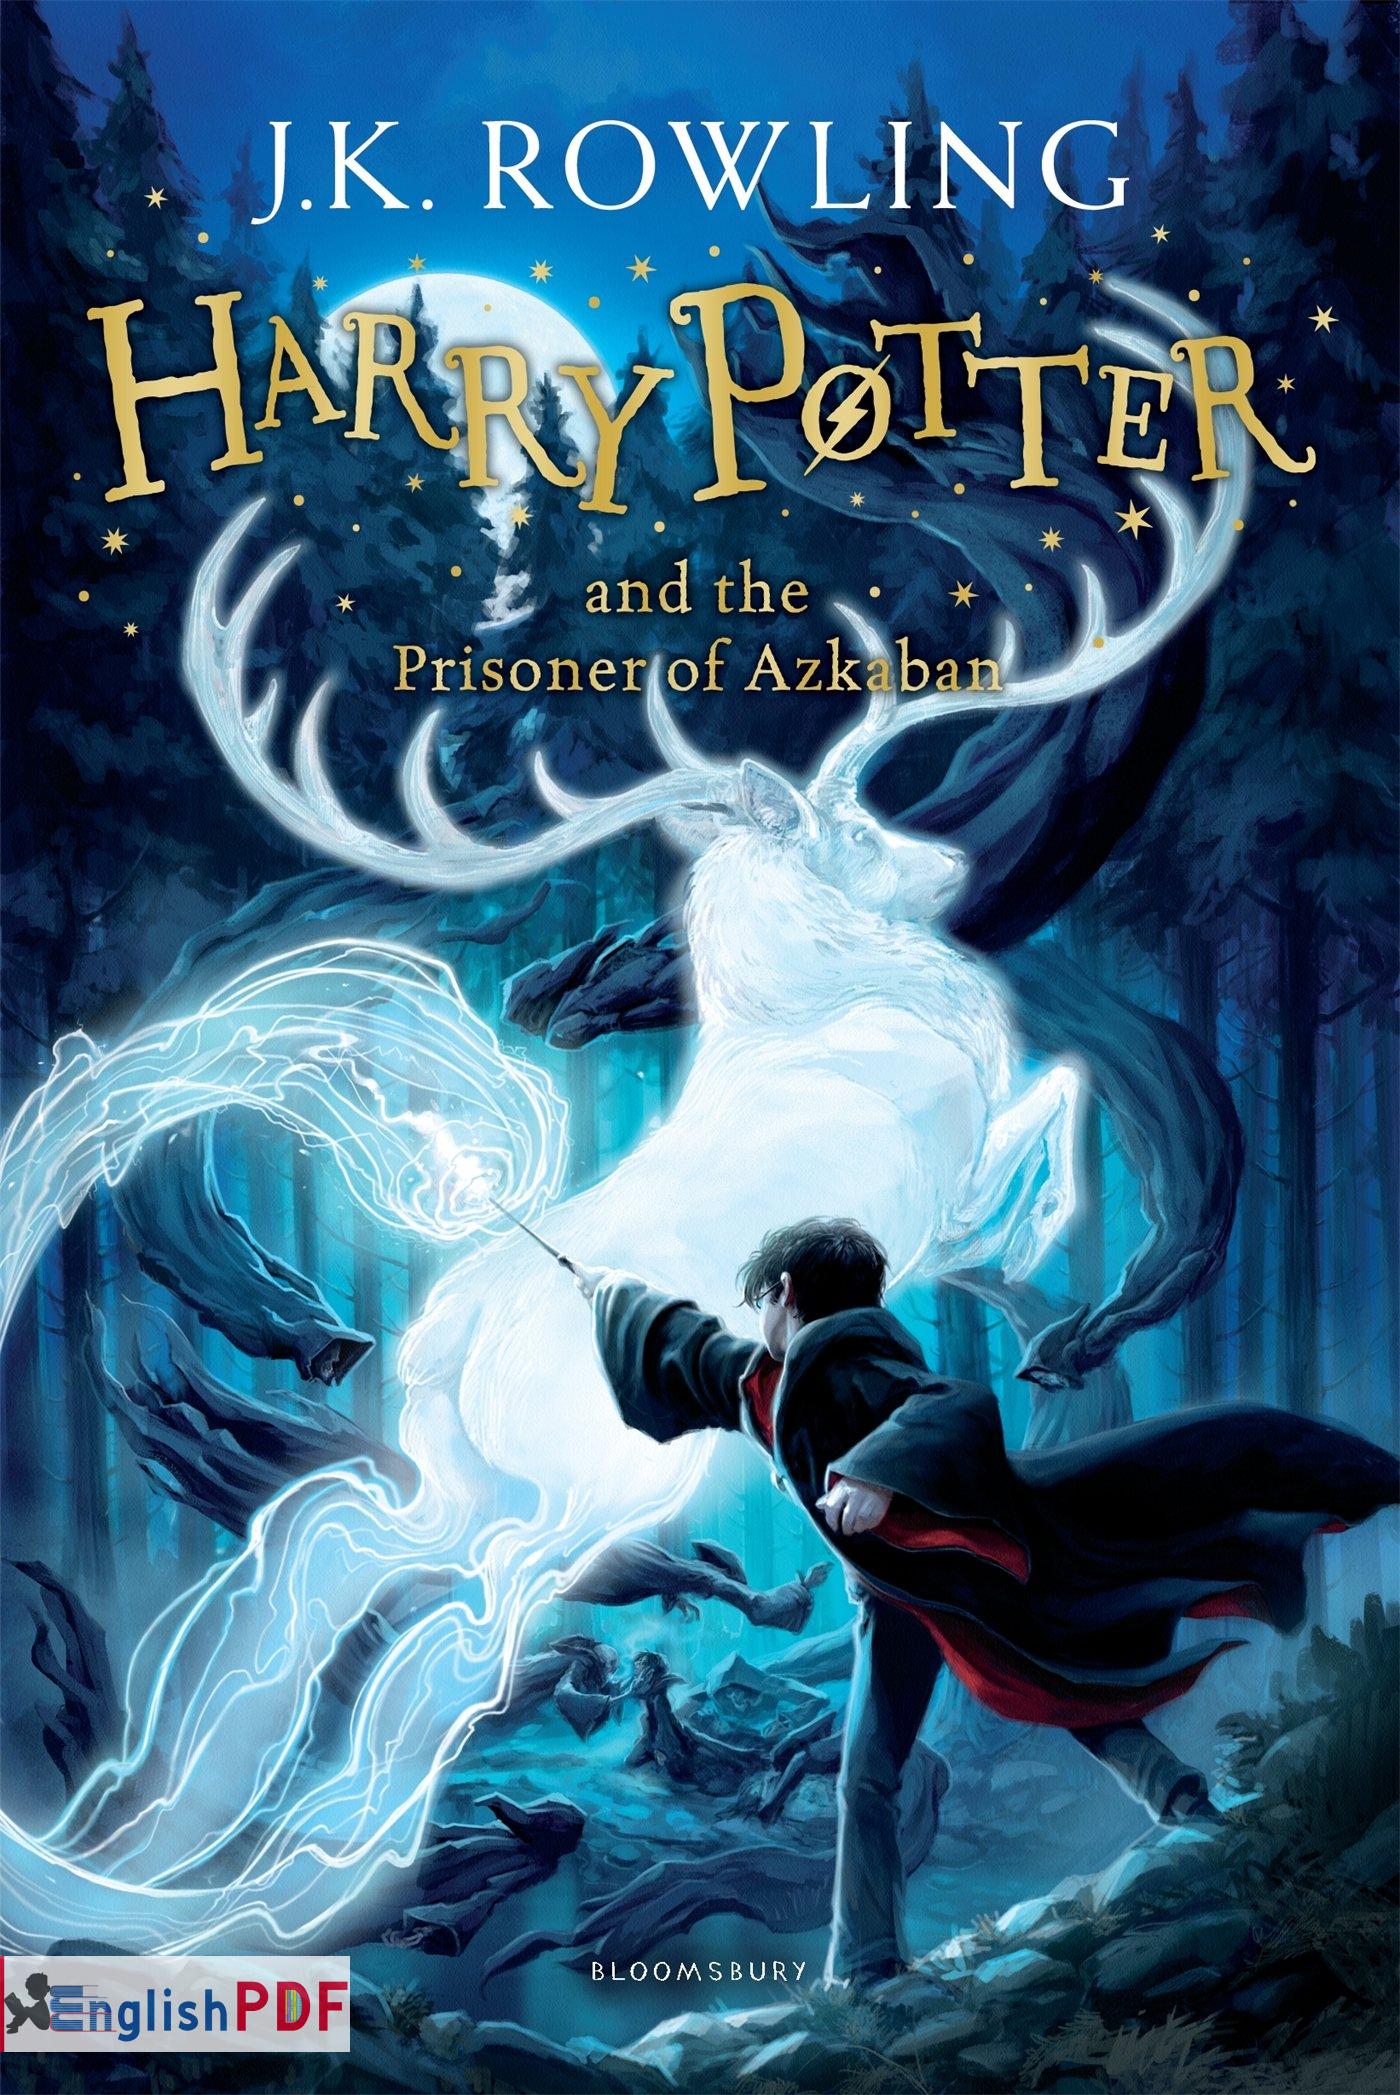 Harry Potter and The Prisoner of Azkaban PDF Free Download